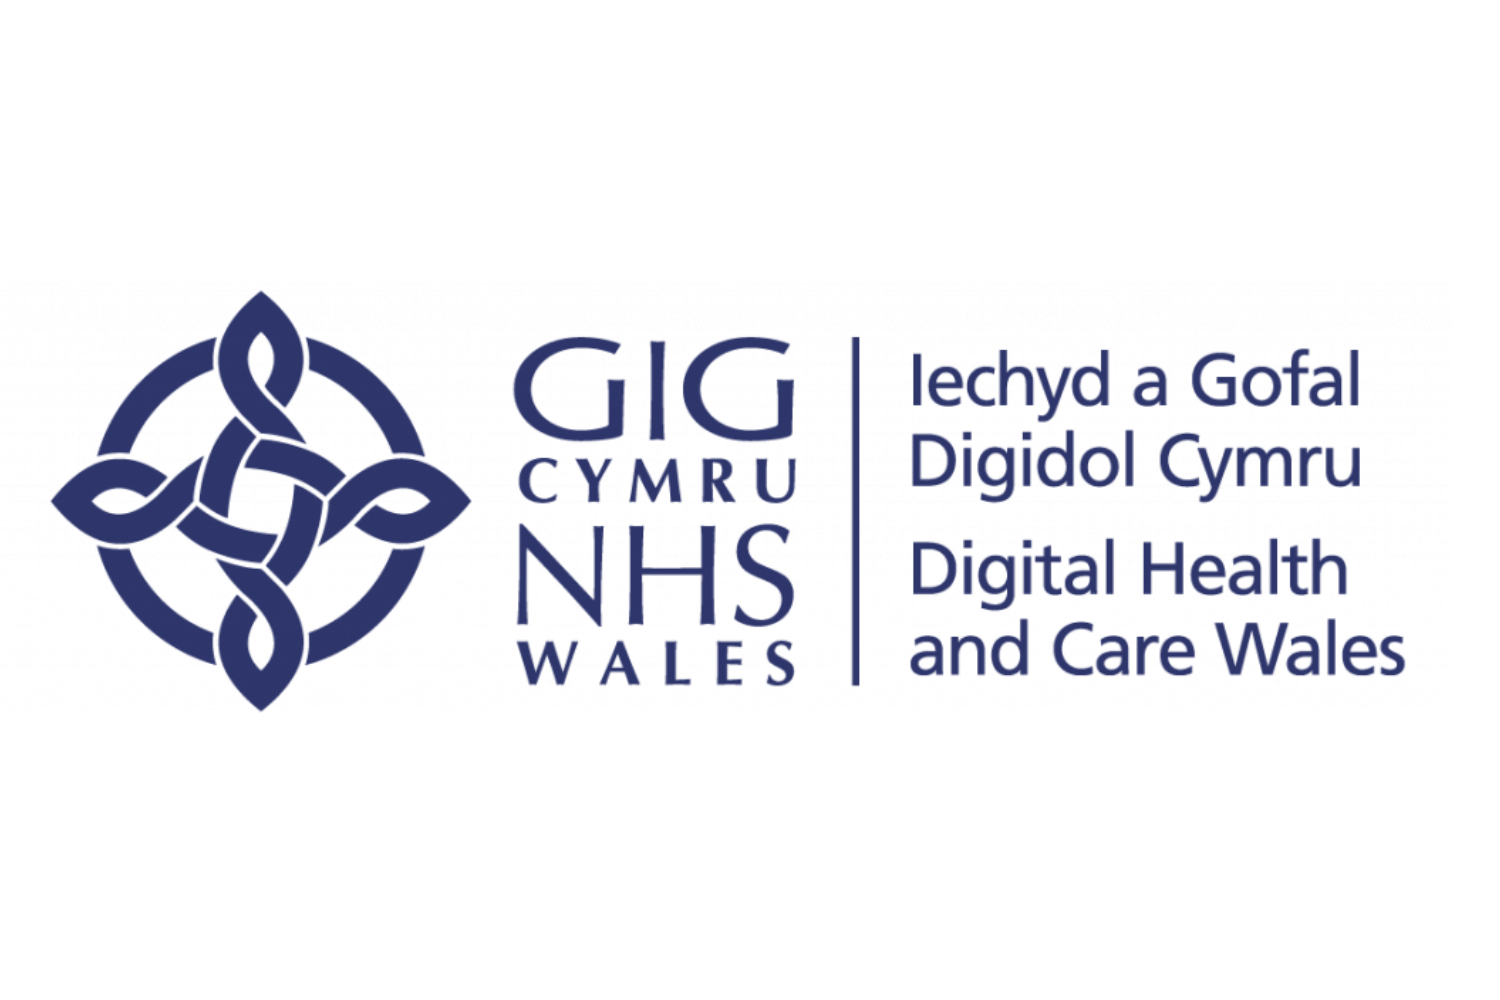 Digital Health Care Wales logo